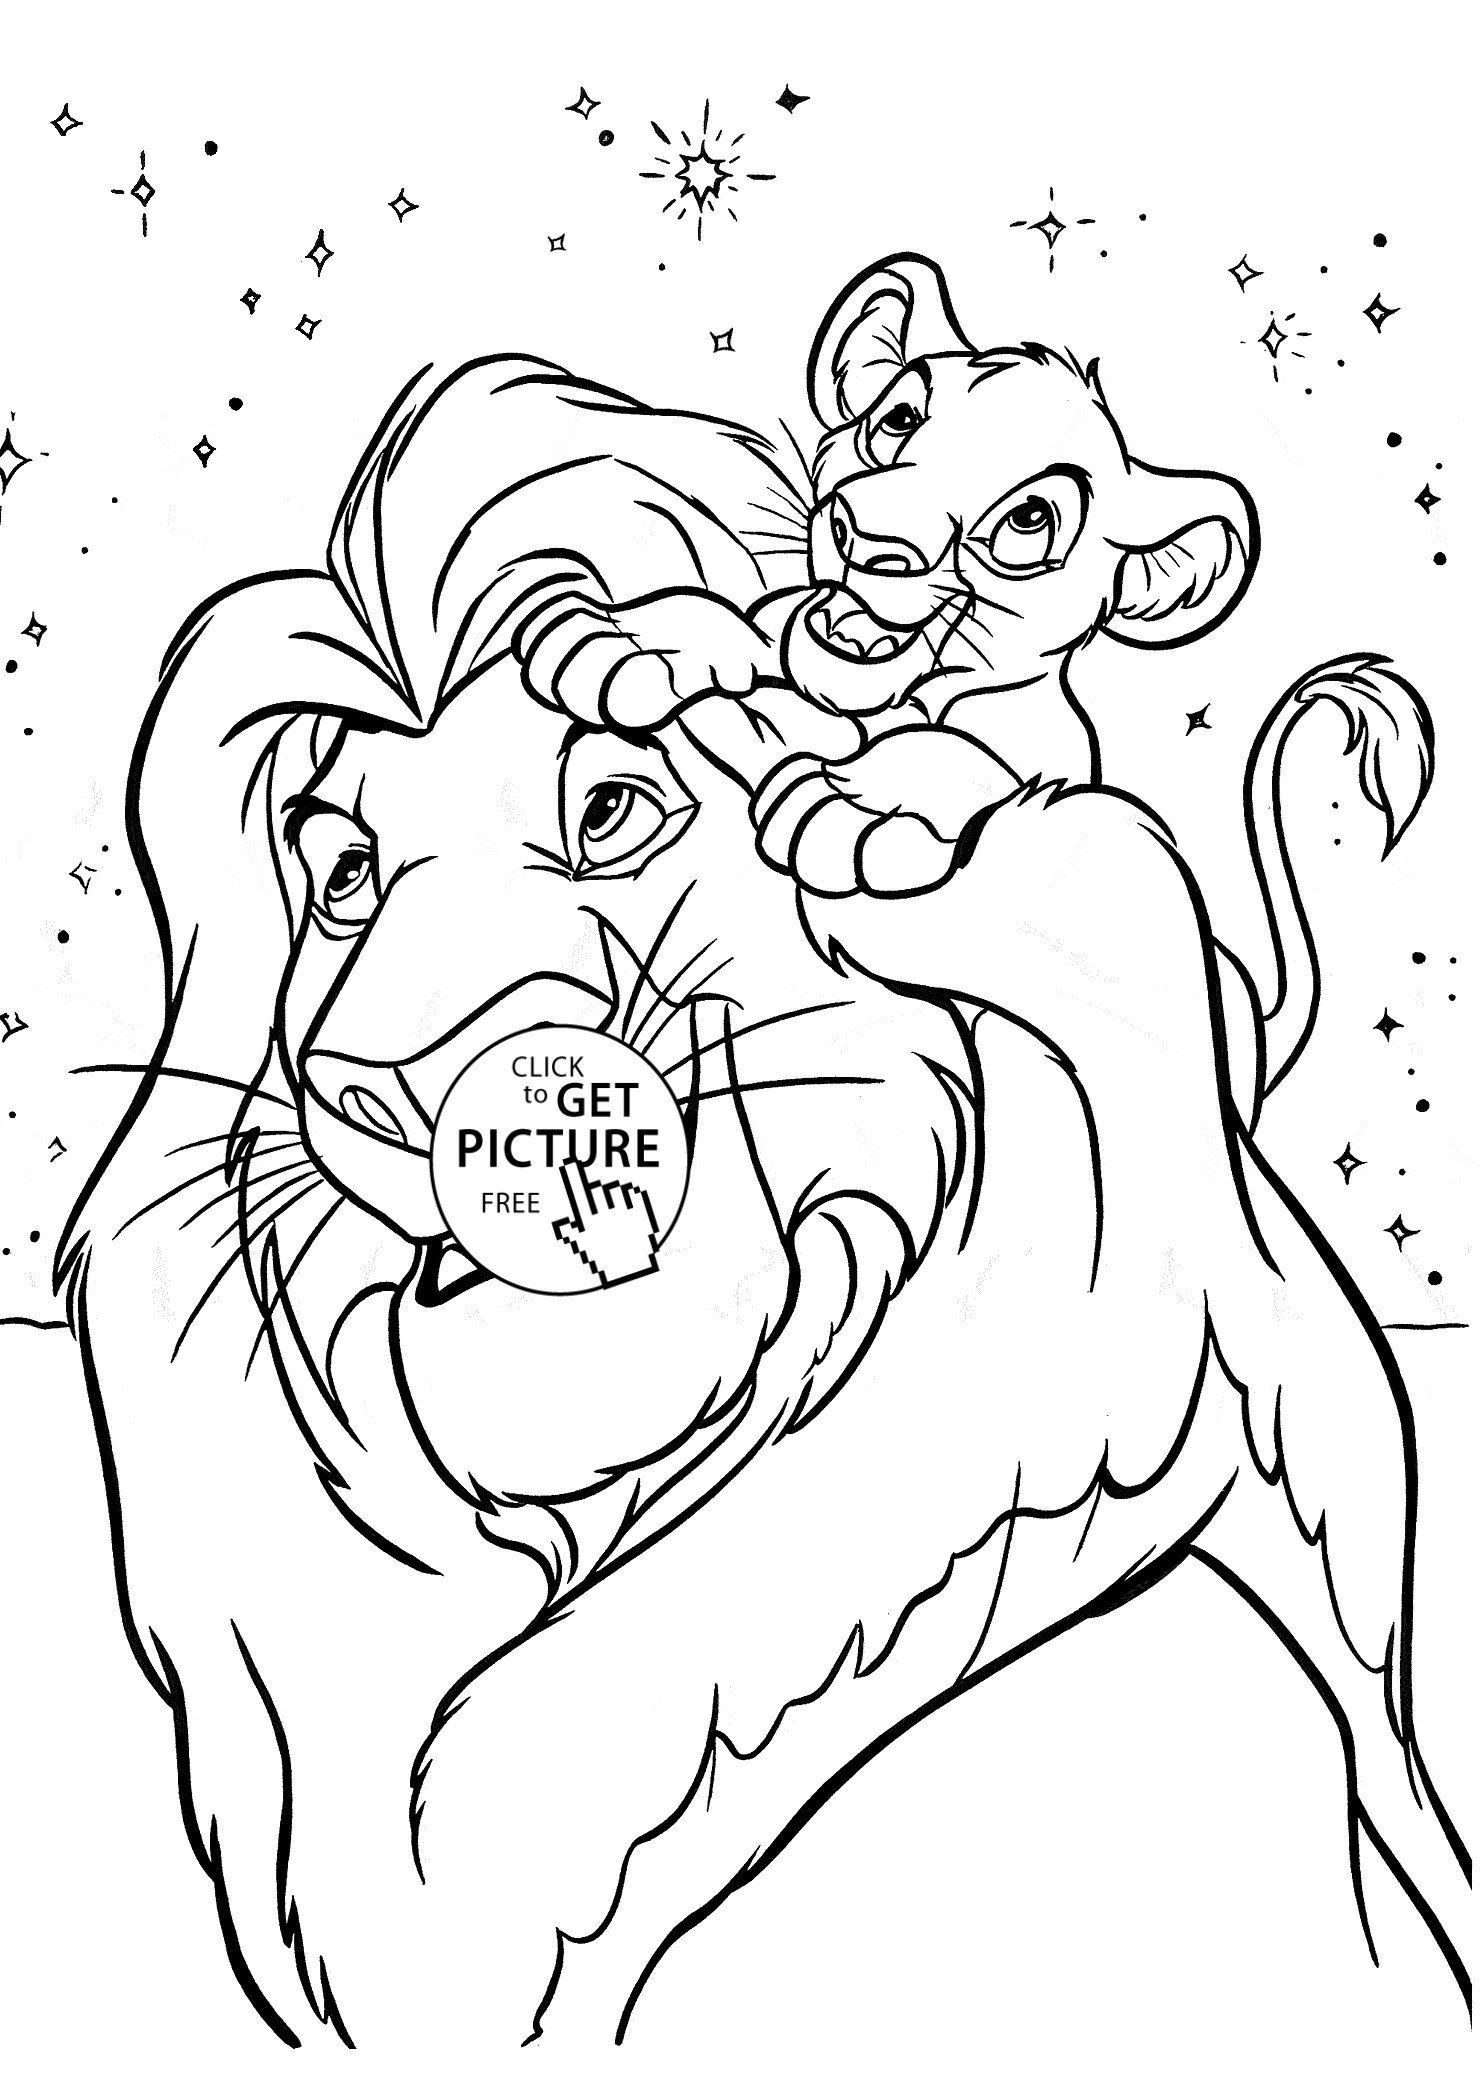 Best ideas about Disney Lion King Coloring Pages For Boys
. Save or Pin Lion King coloring page for kids disney coloring pages Now.